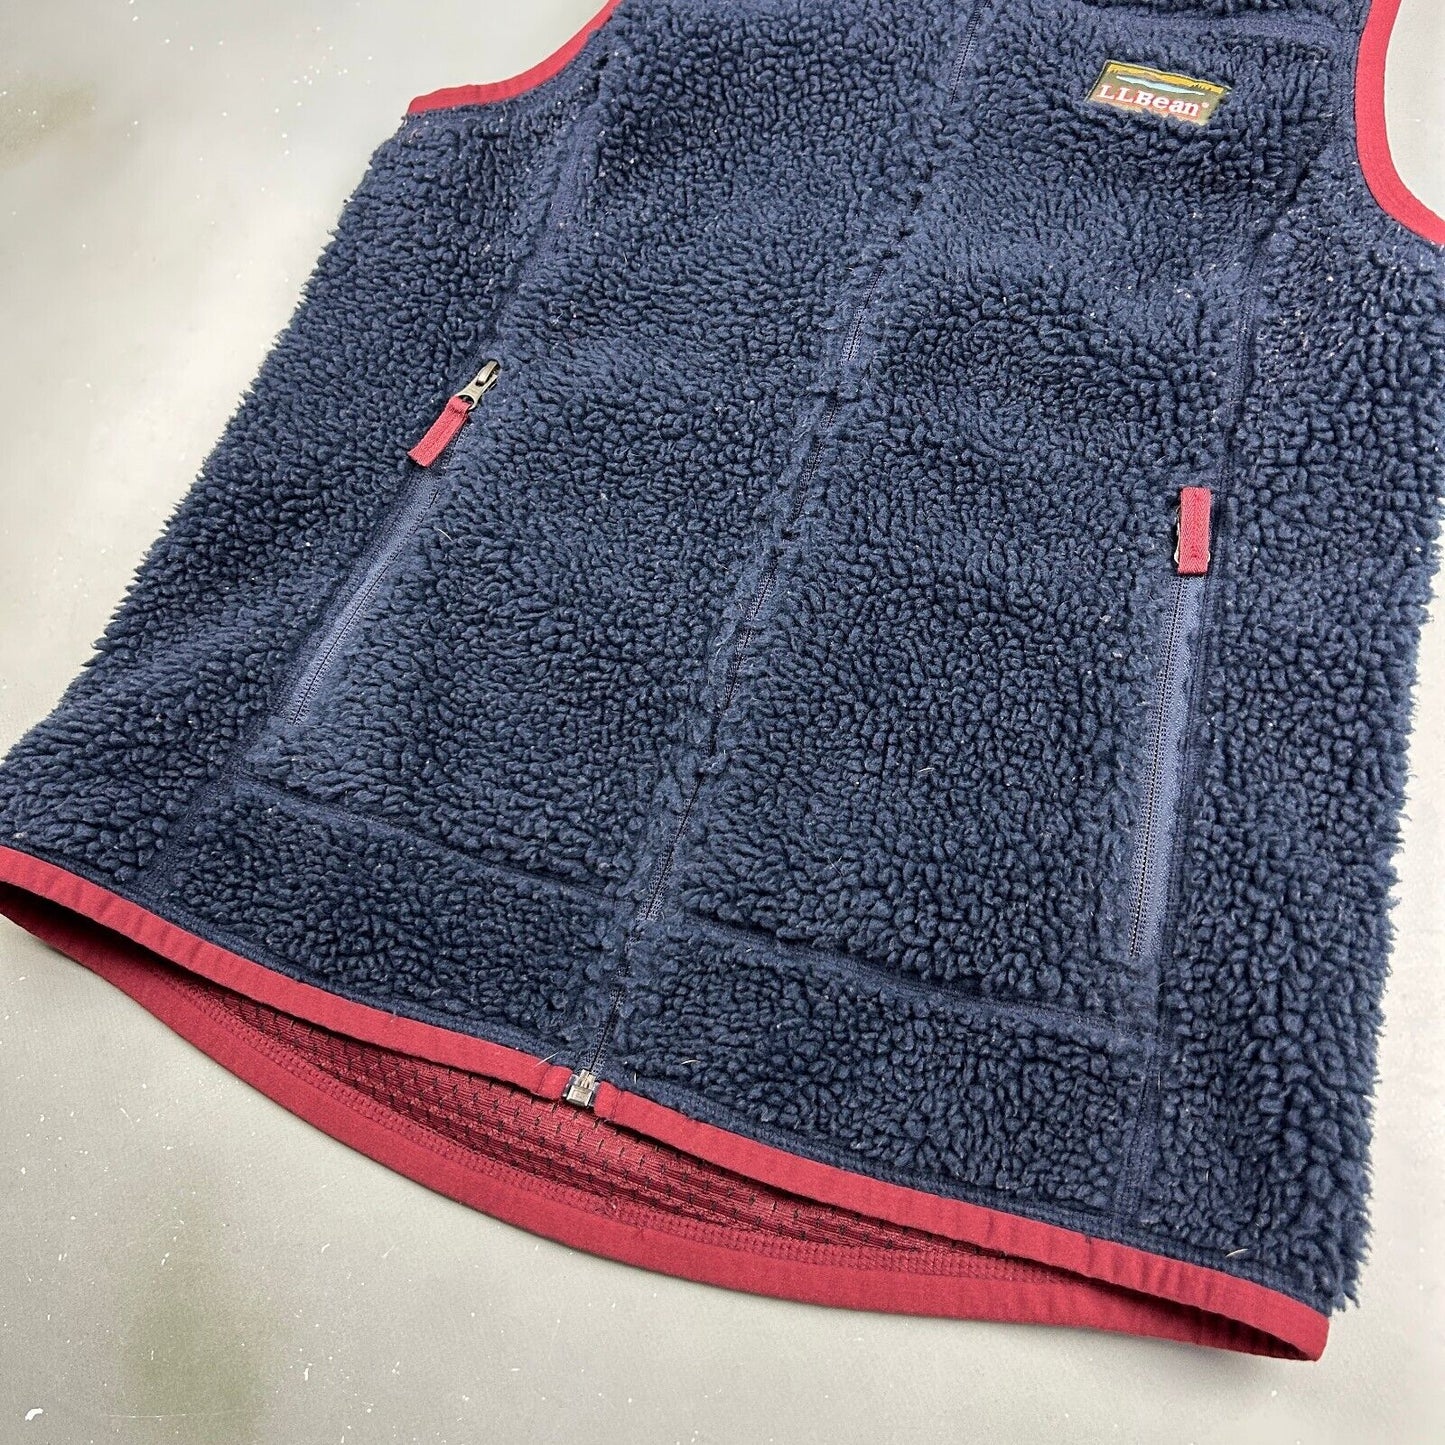 VINTAGE L.L Bean Deep Pile Full Zip Vest Fleece Sweater sz Small Adult